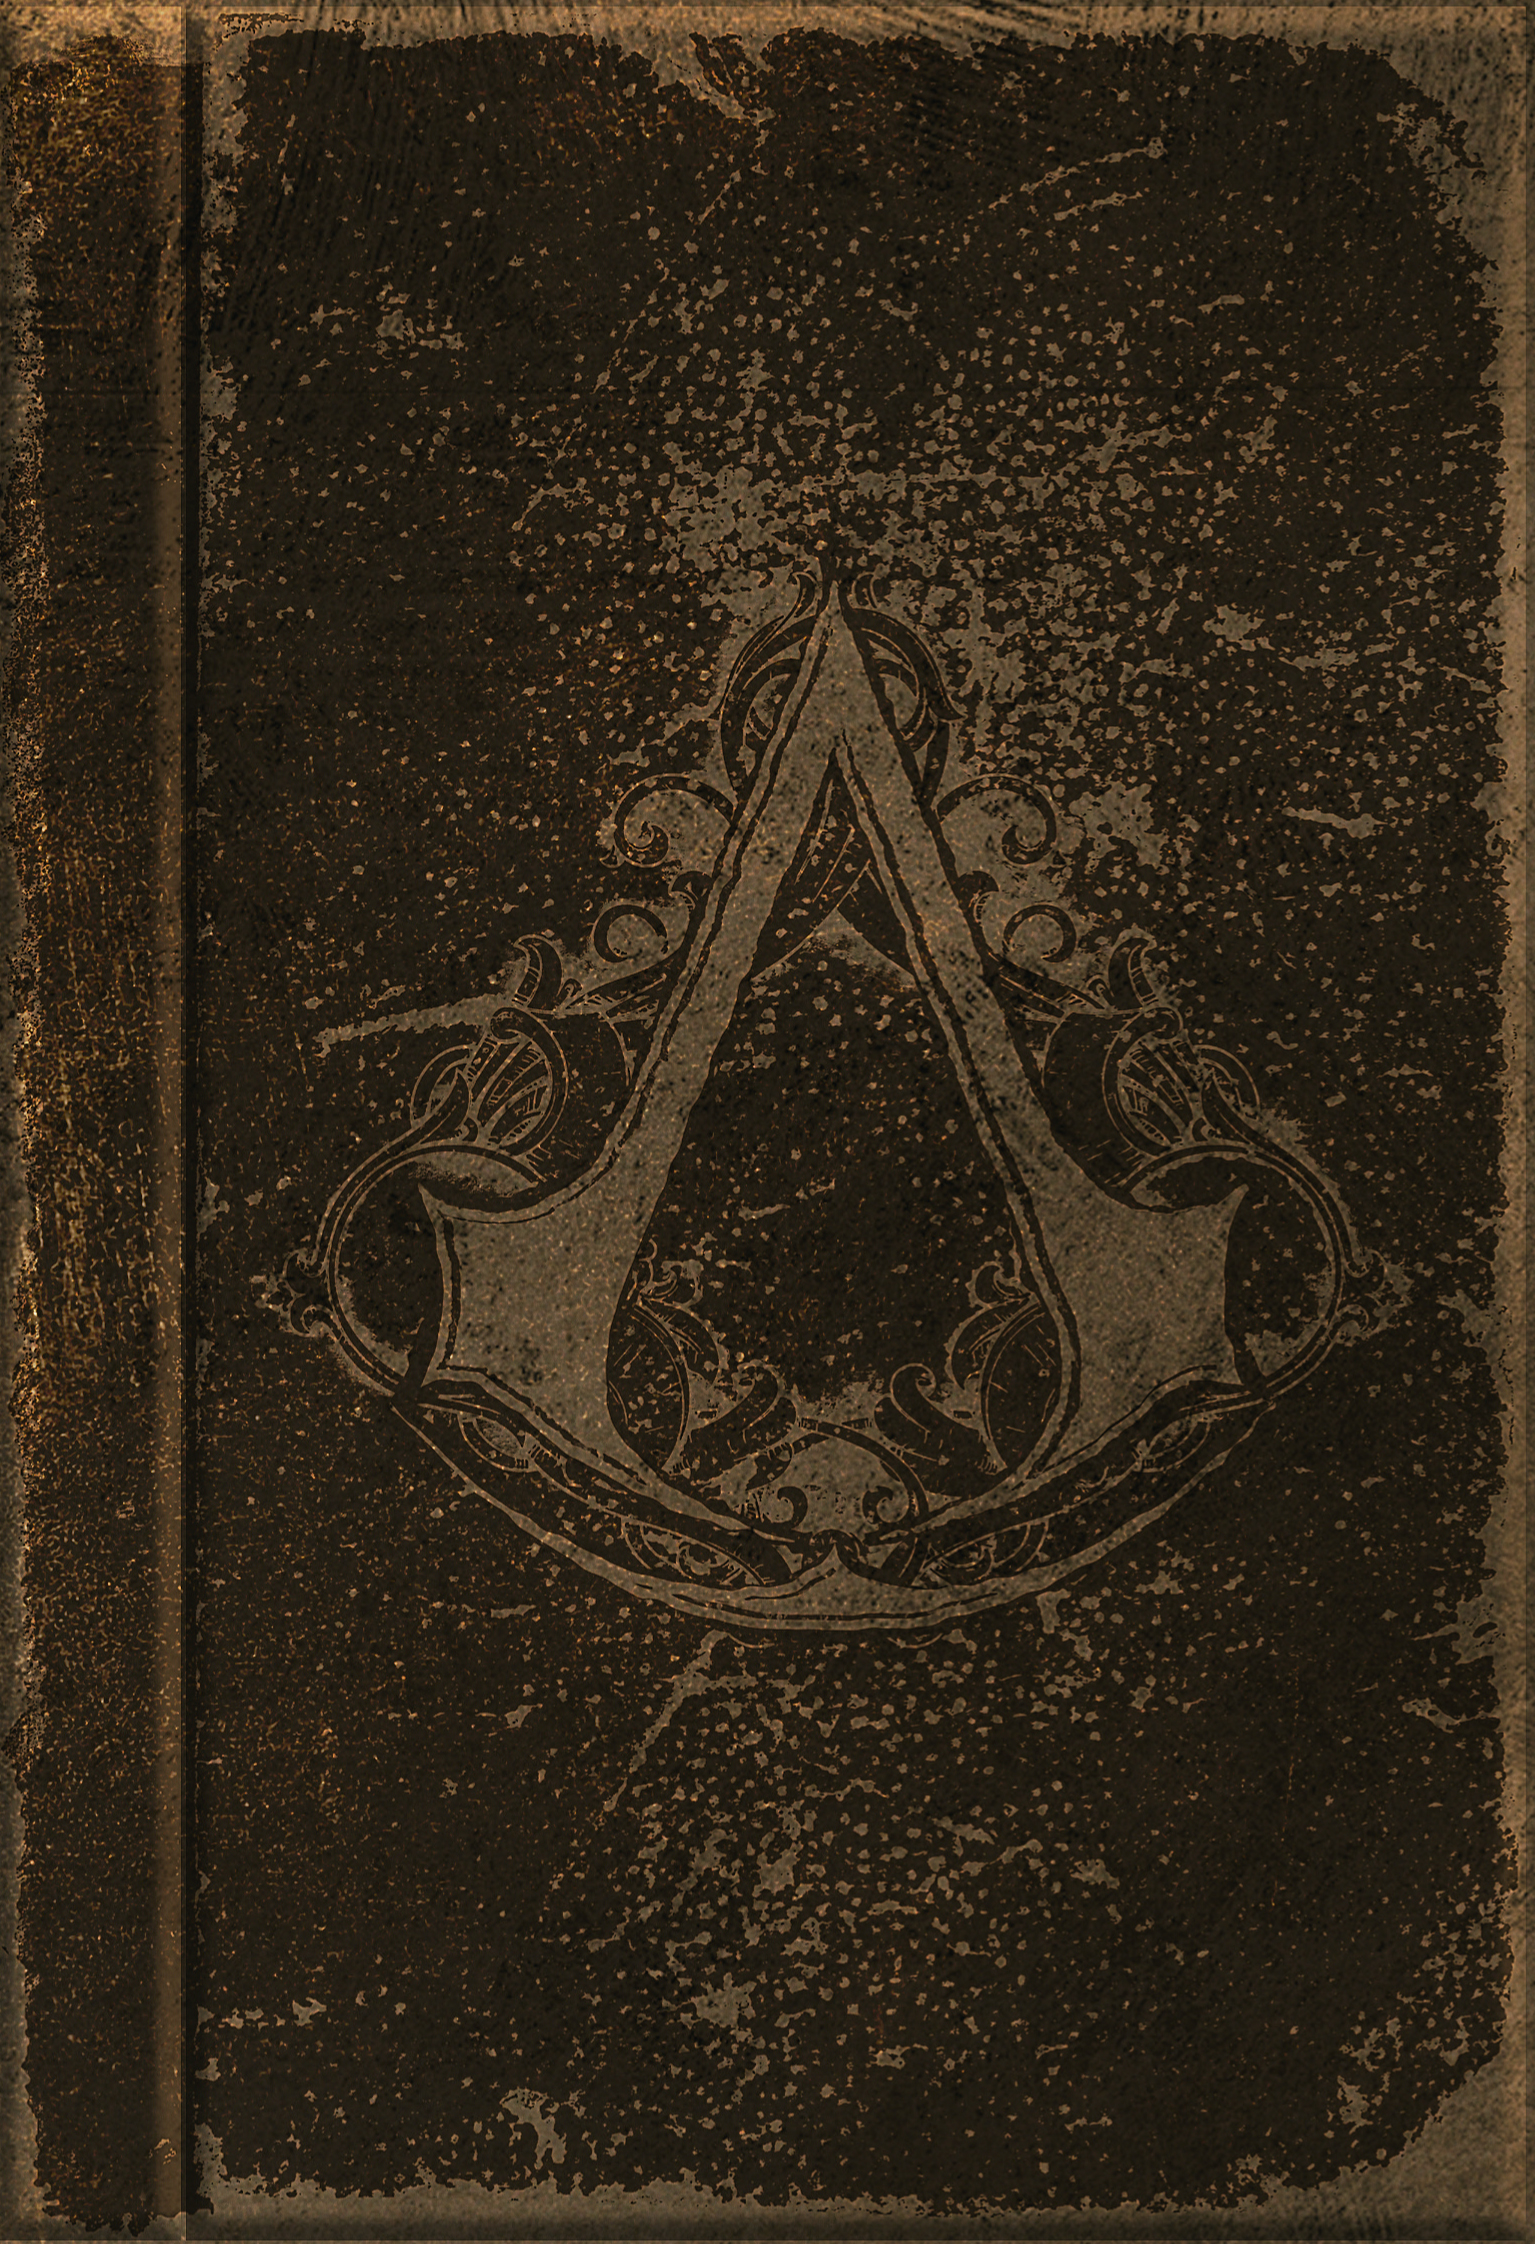 4 de enero de 1777 | Assassin's Creed Center